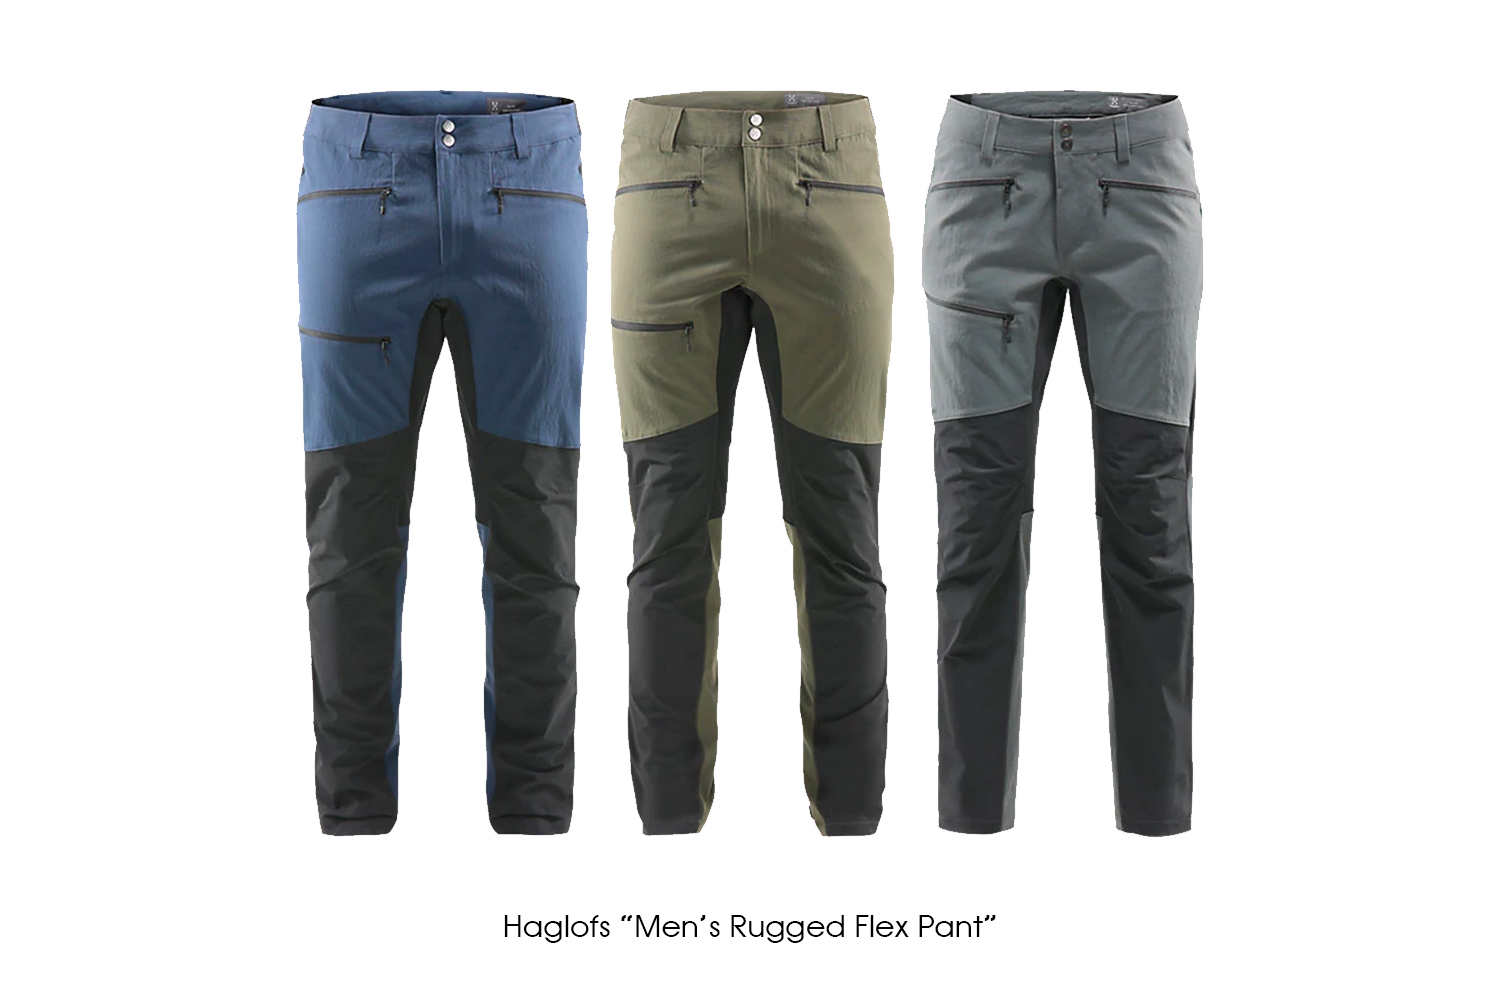 Haglofs “Men’s Rugged Flex Pant”